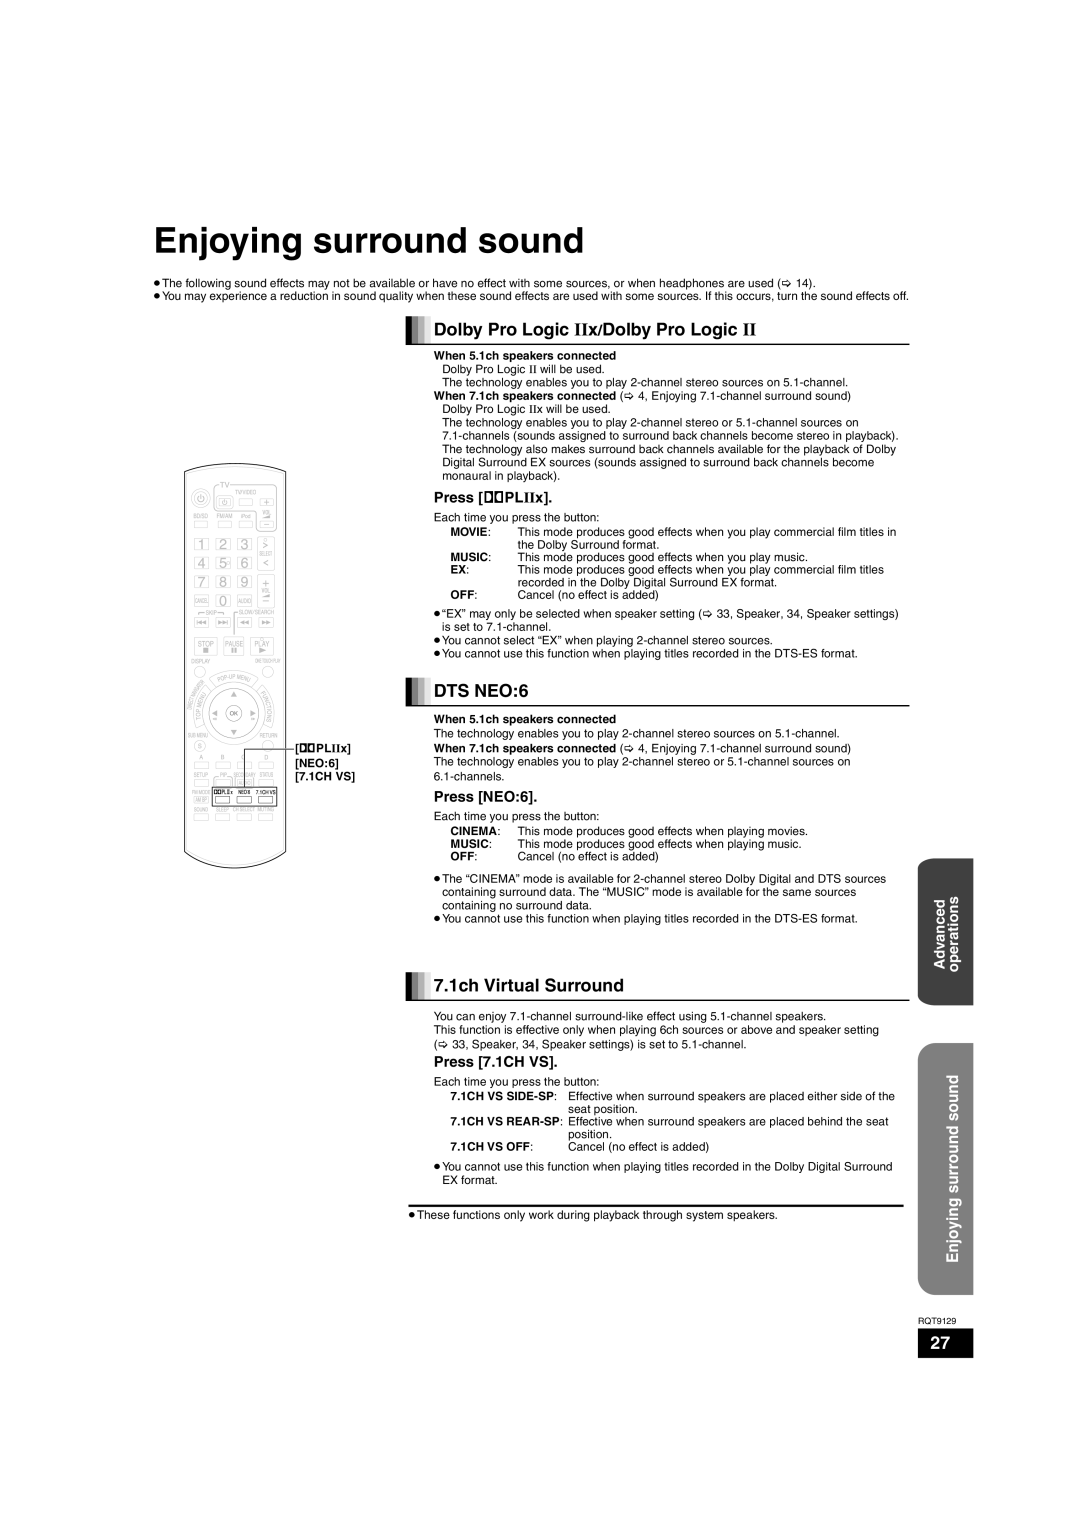 Panasonic SC-BT100 warranty Enjoying surround sound, Dolby Pro Logic IIx/Dolby Pro Logic, Dts Neo, 7.1ch Virtual Surround 